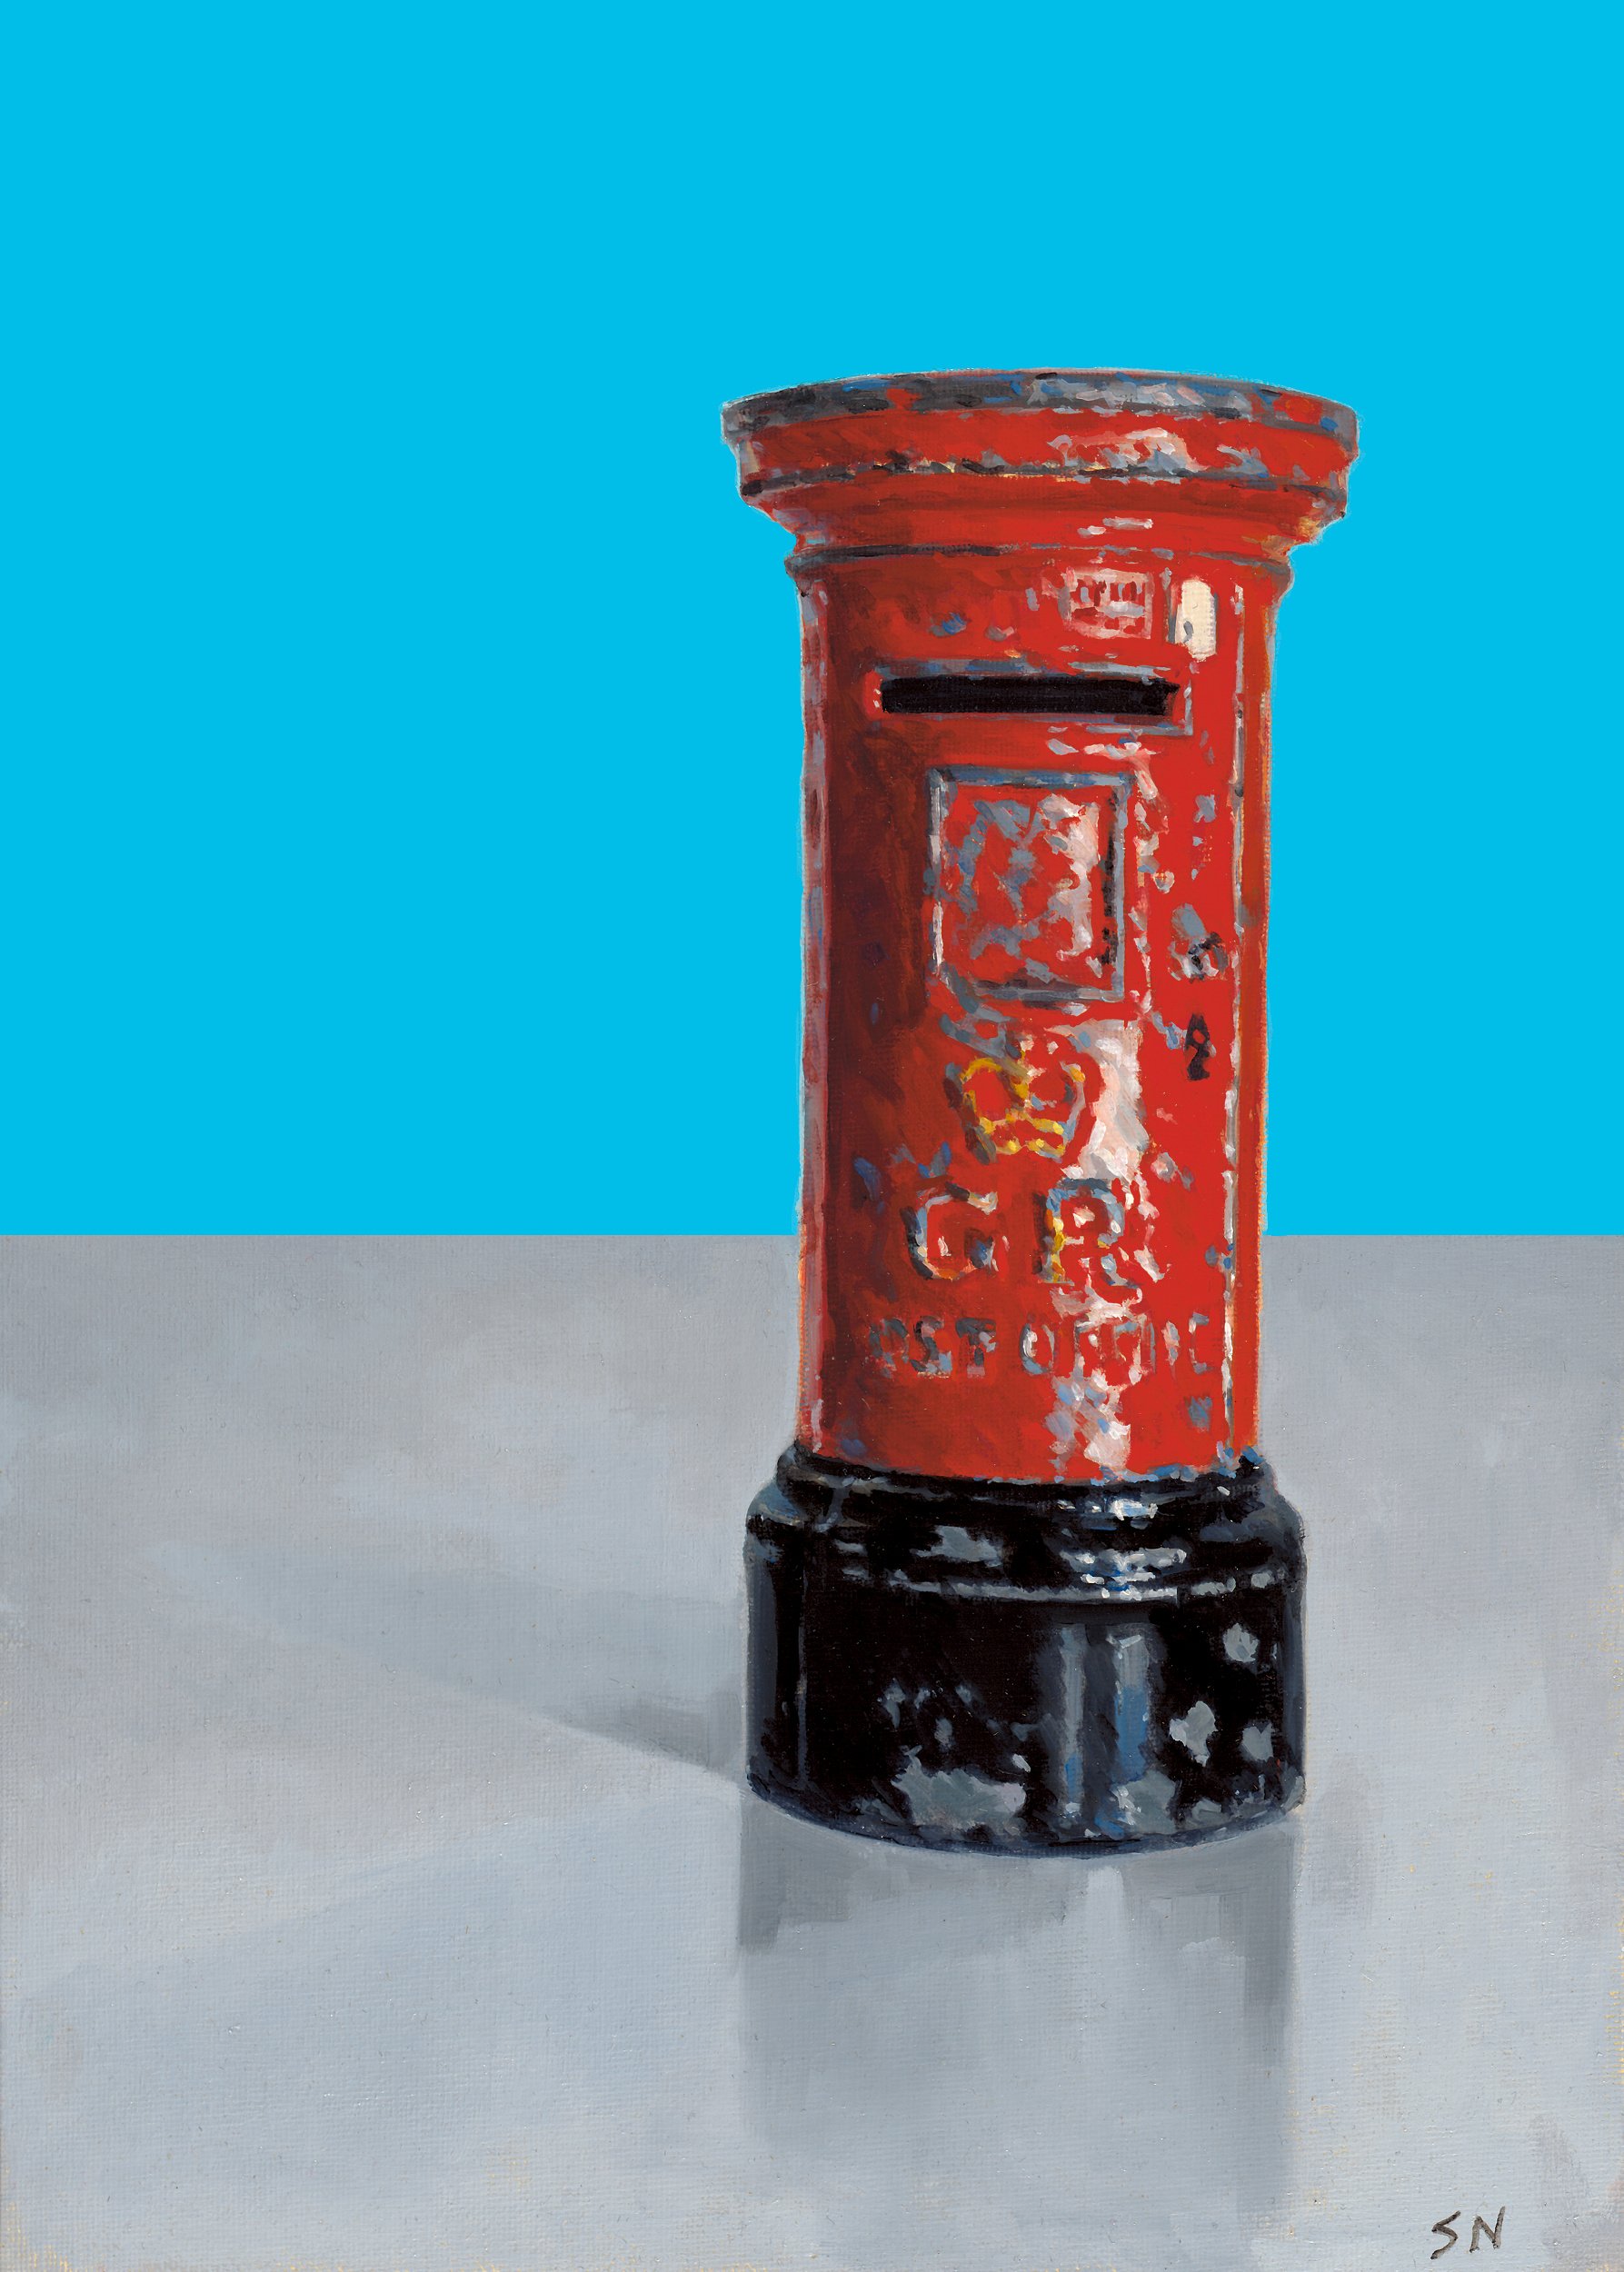 John Hill &amp; Co toy Royal Mail post box